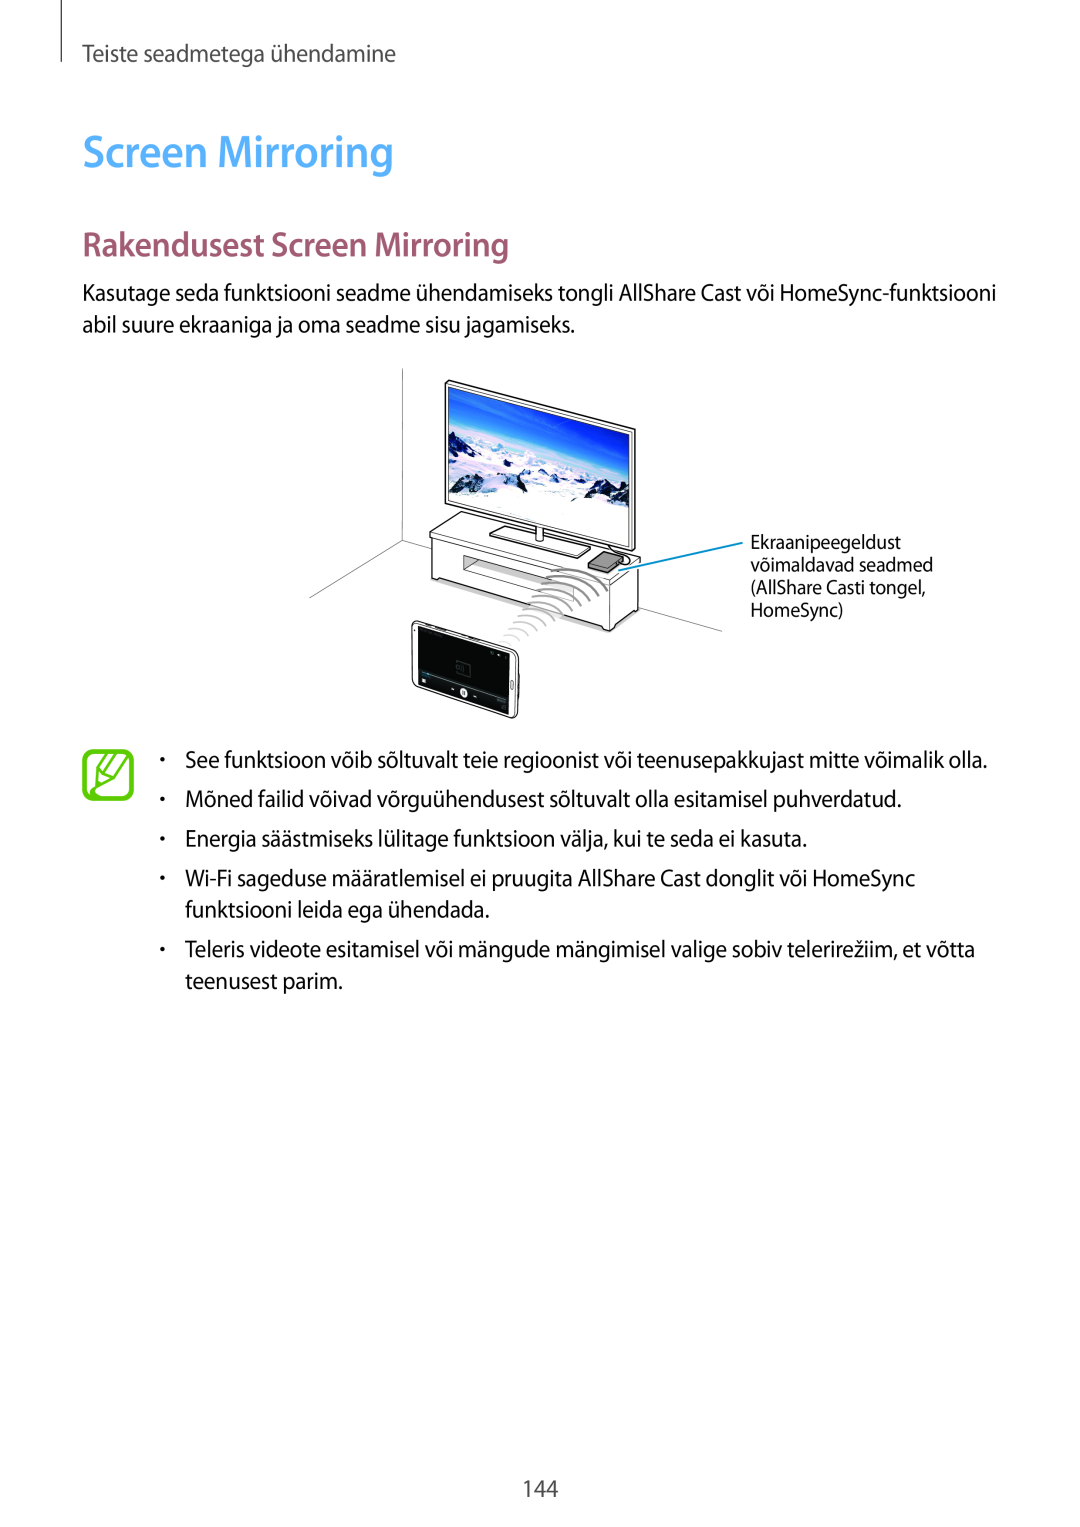 Samsung SM-T700NZWASEB, SM-T700NTSASEB manual Rakendusest Screen Mirroring, Teiste seadmetega ühendamine 